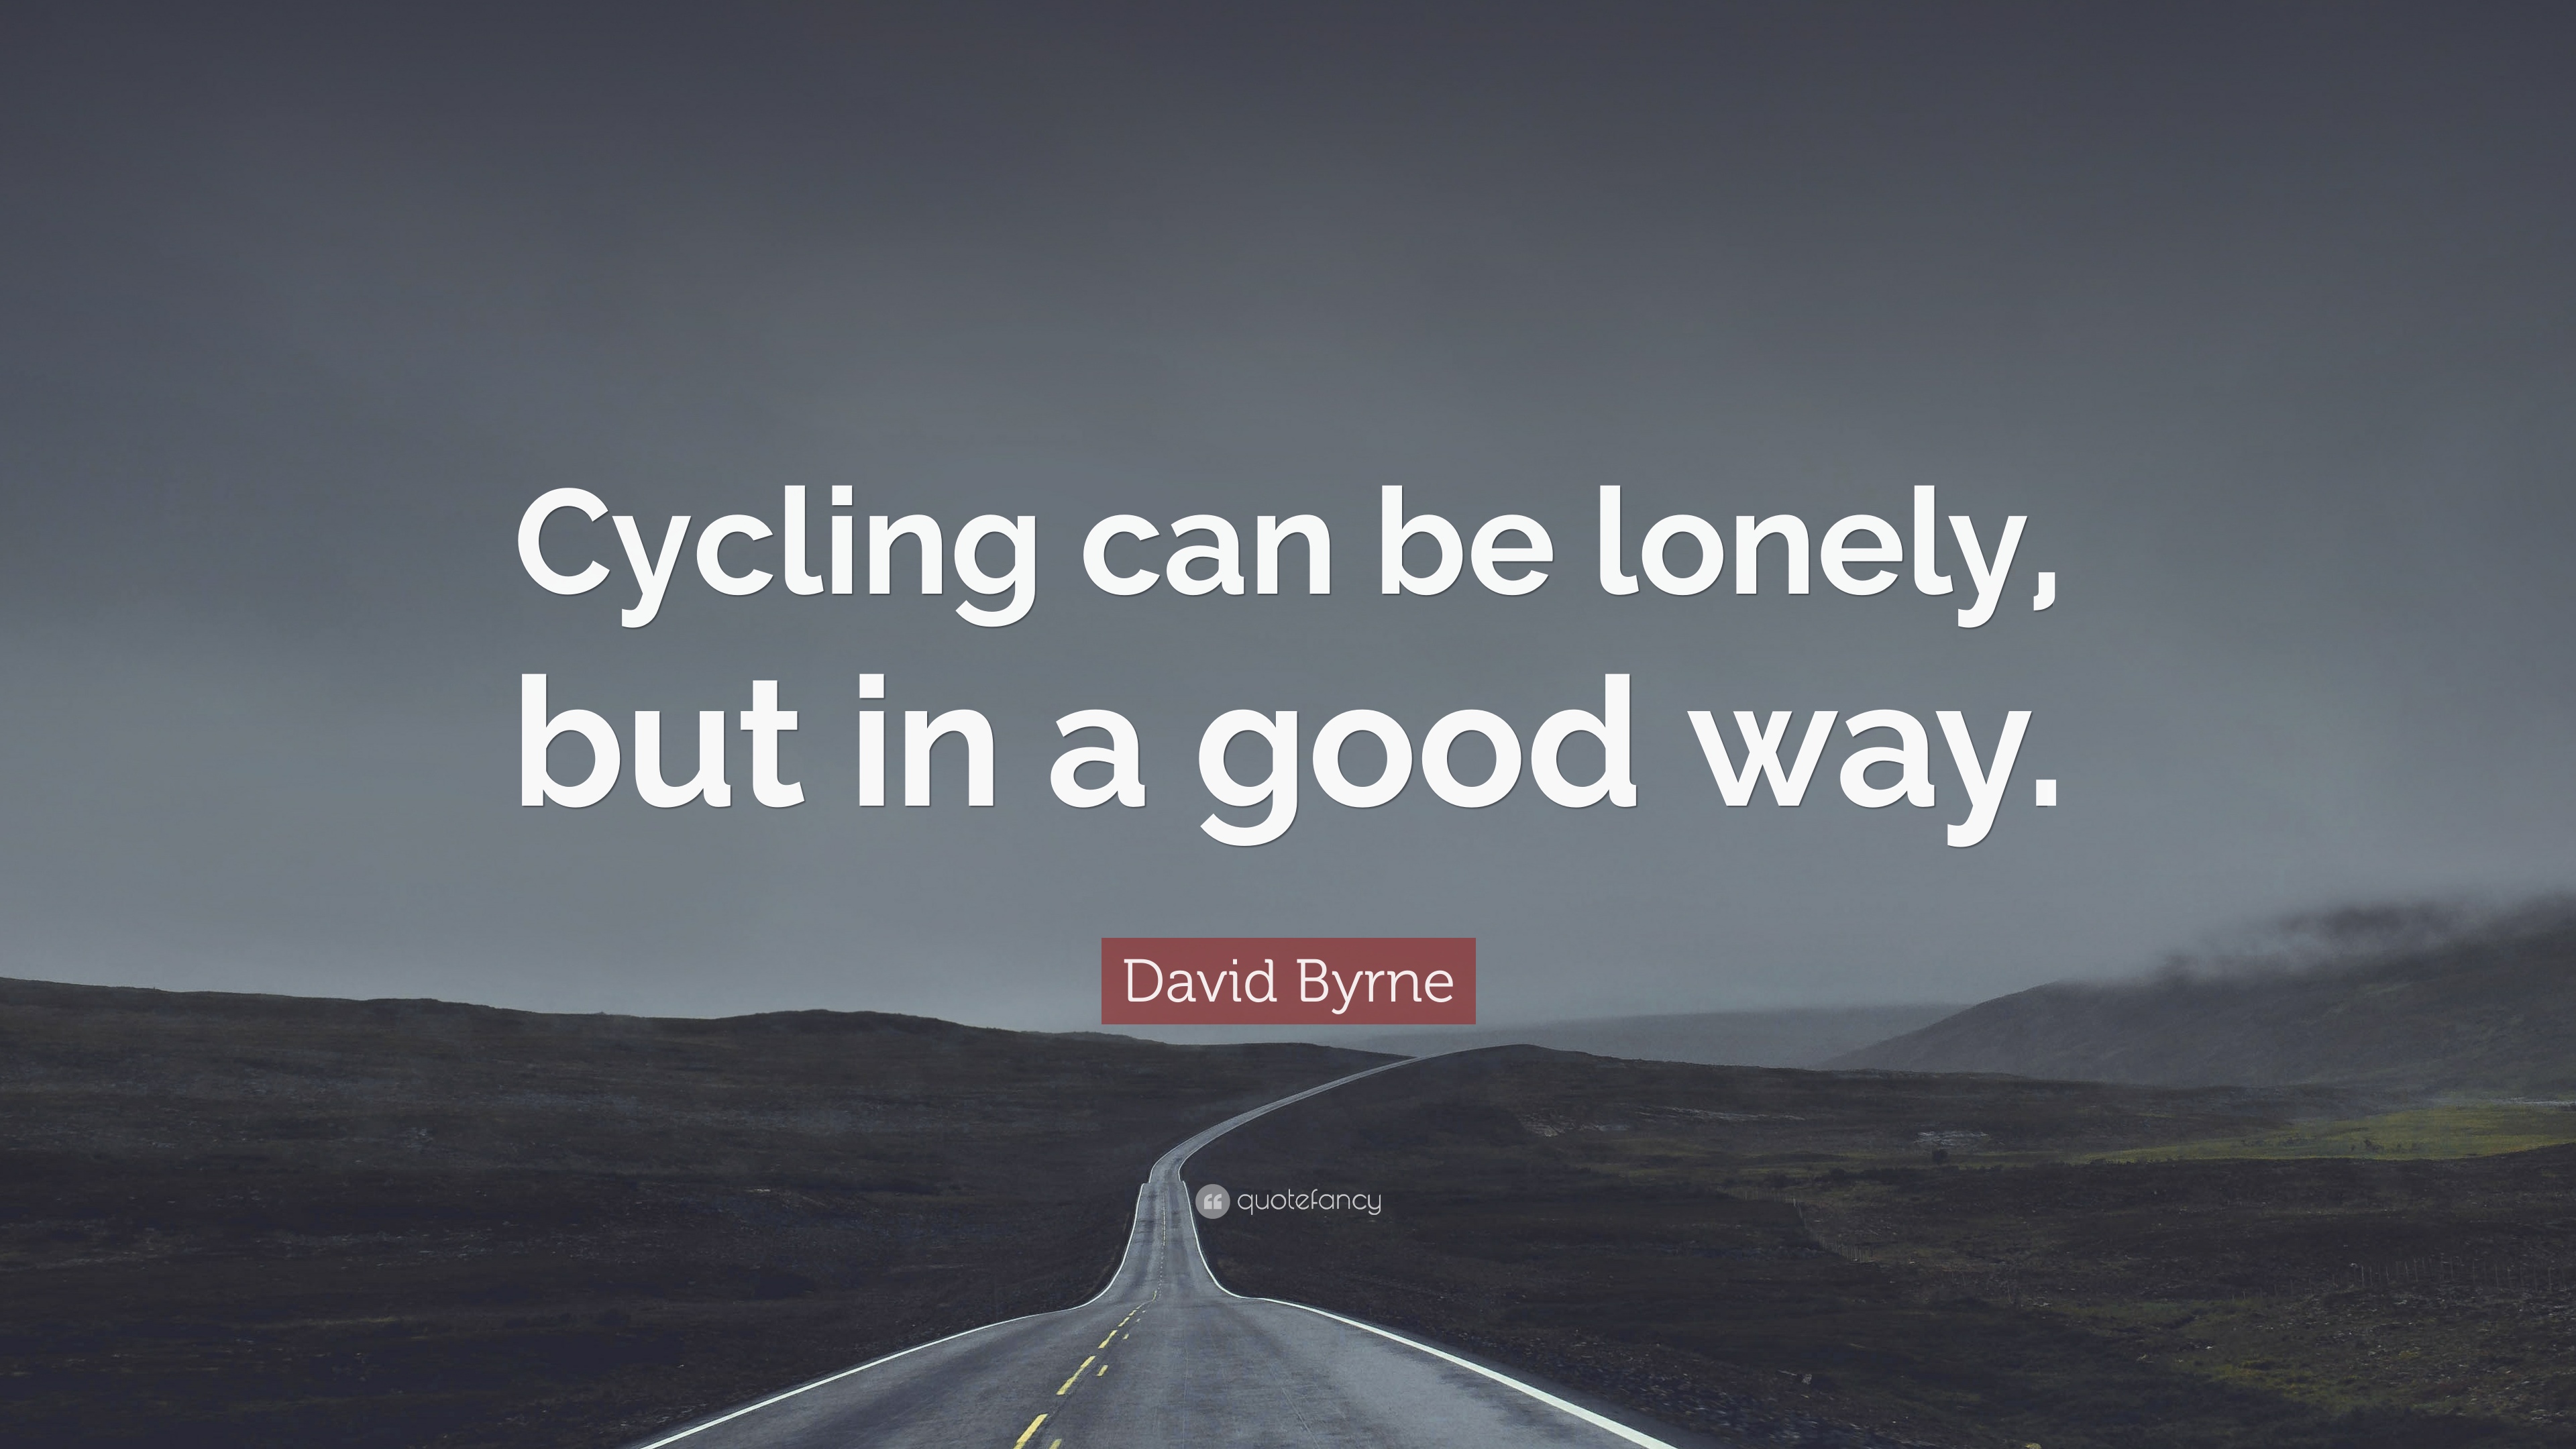 10 Best David Byrne Quotes